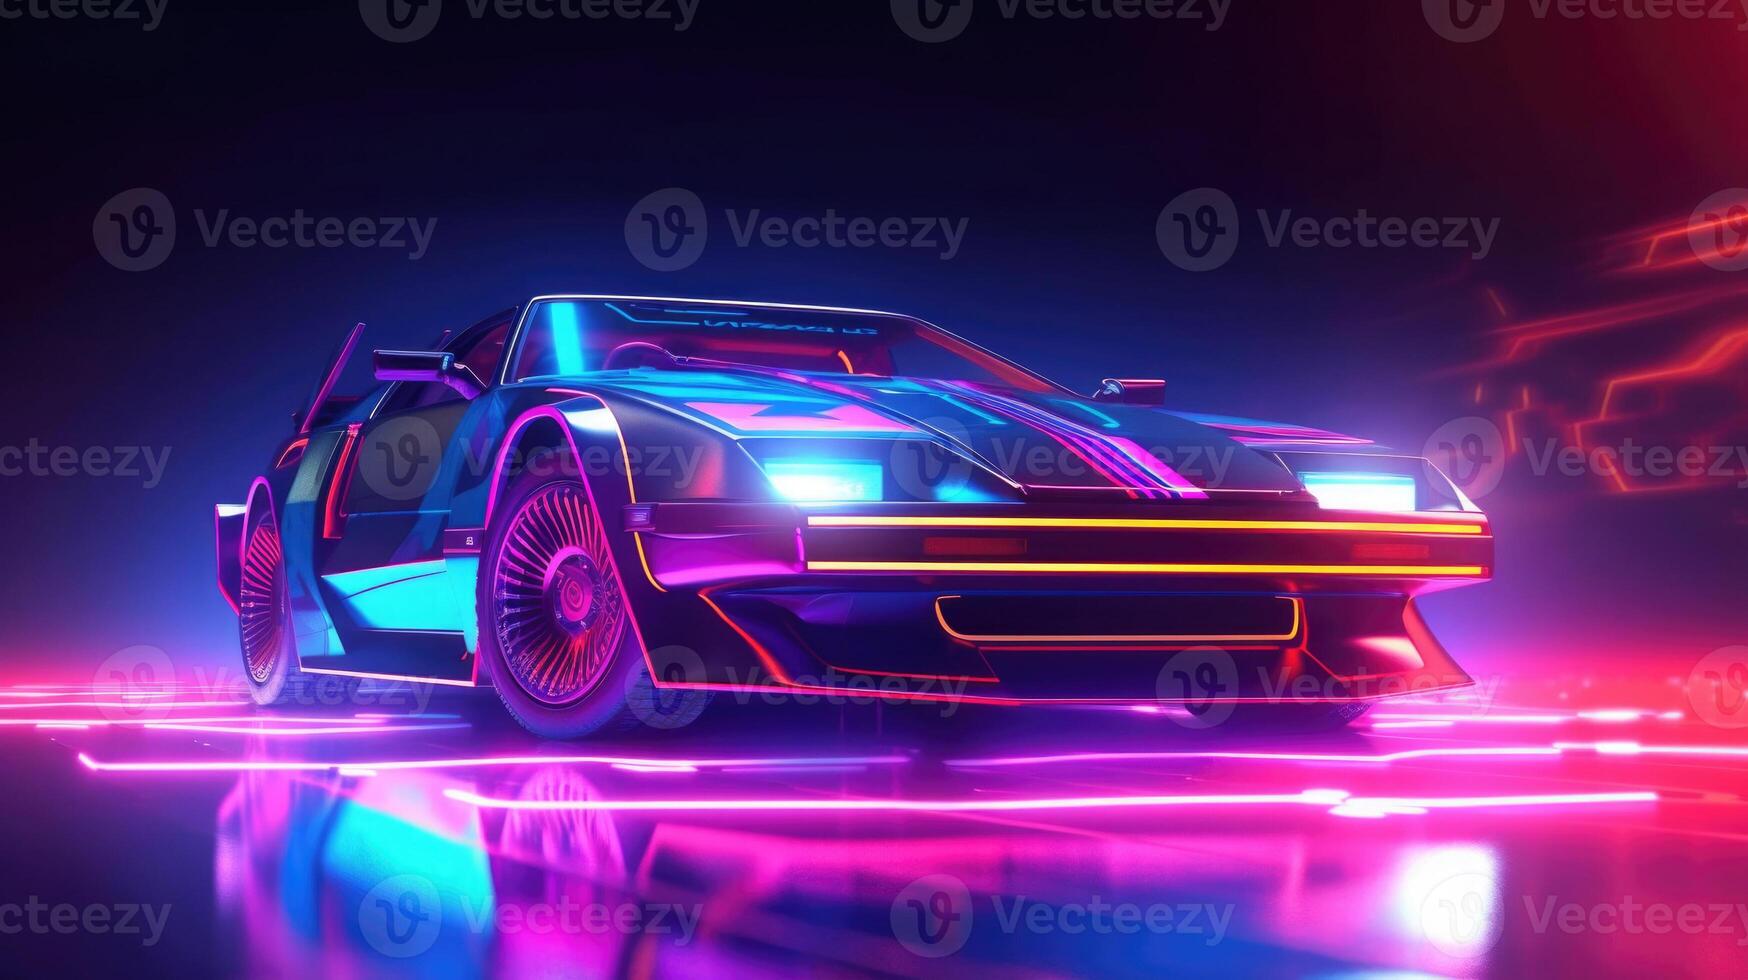 Futuristic sport car with neon lights at cyberpunk city street. photo